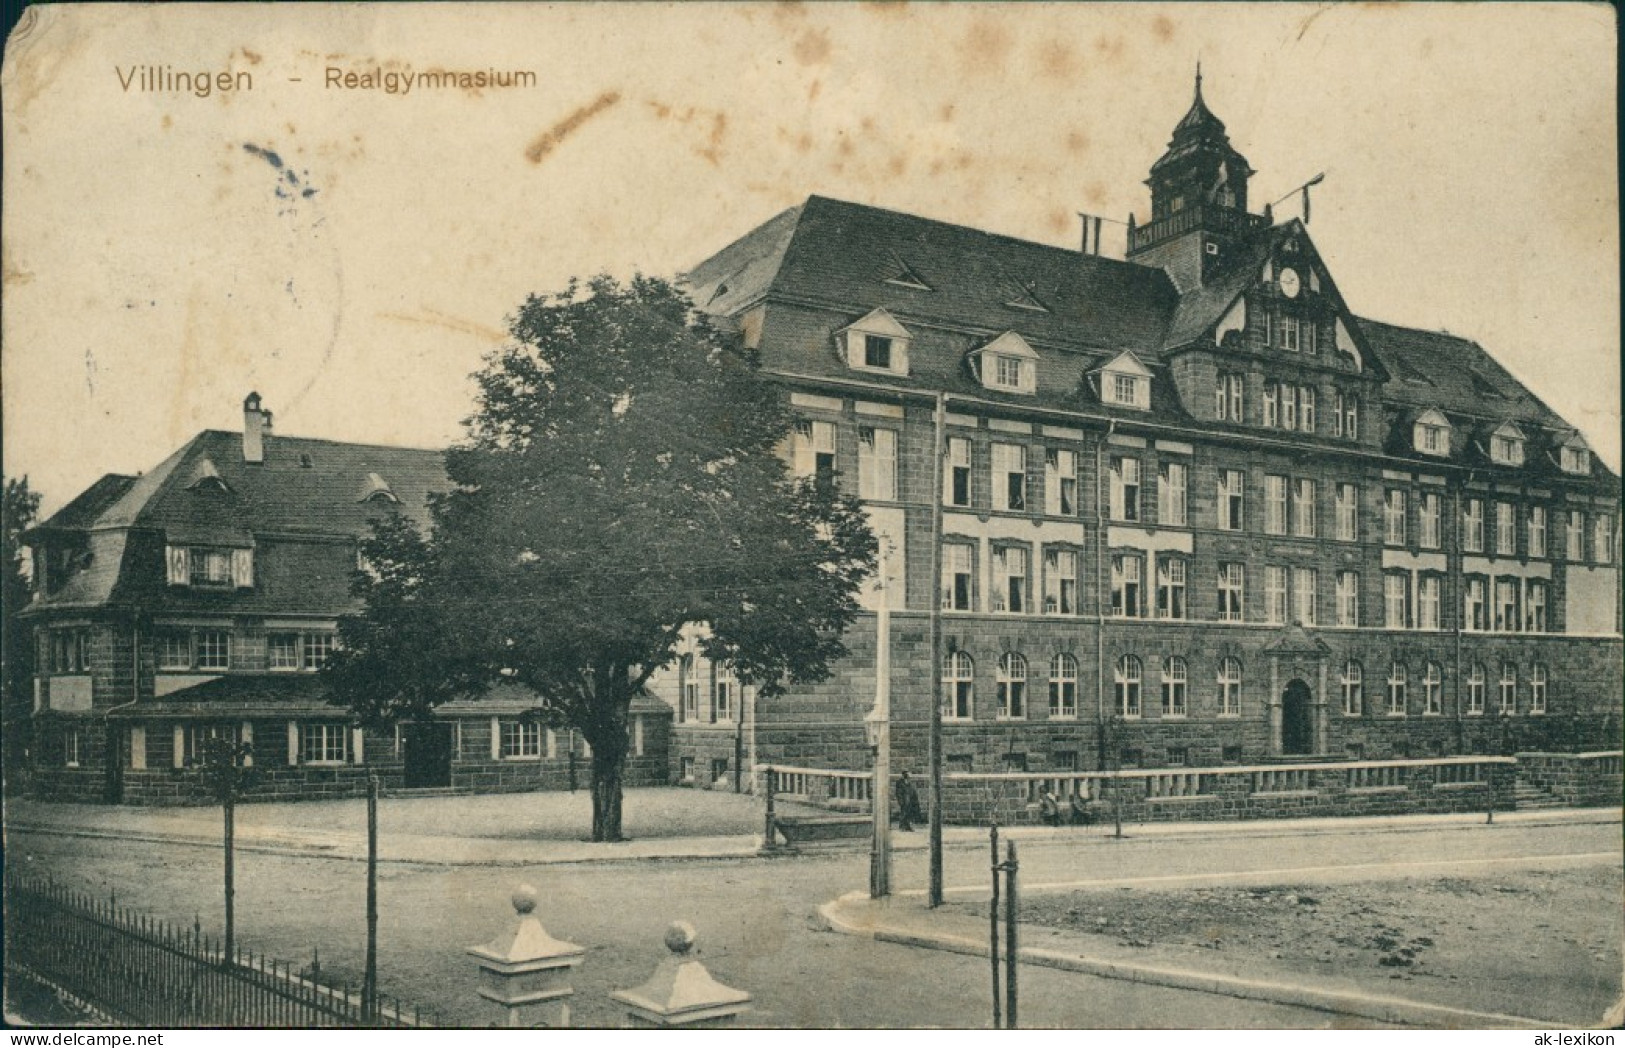 Ansichtskarte Villingen-Schwenningen Realgymnasium 1912 - Villingen - Schwenningen